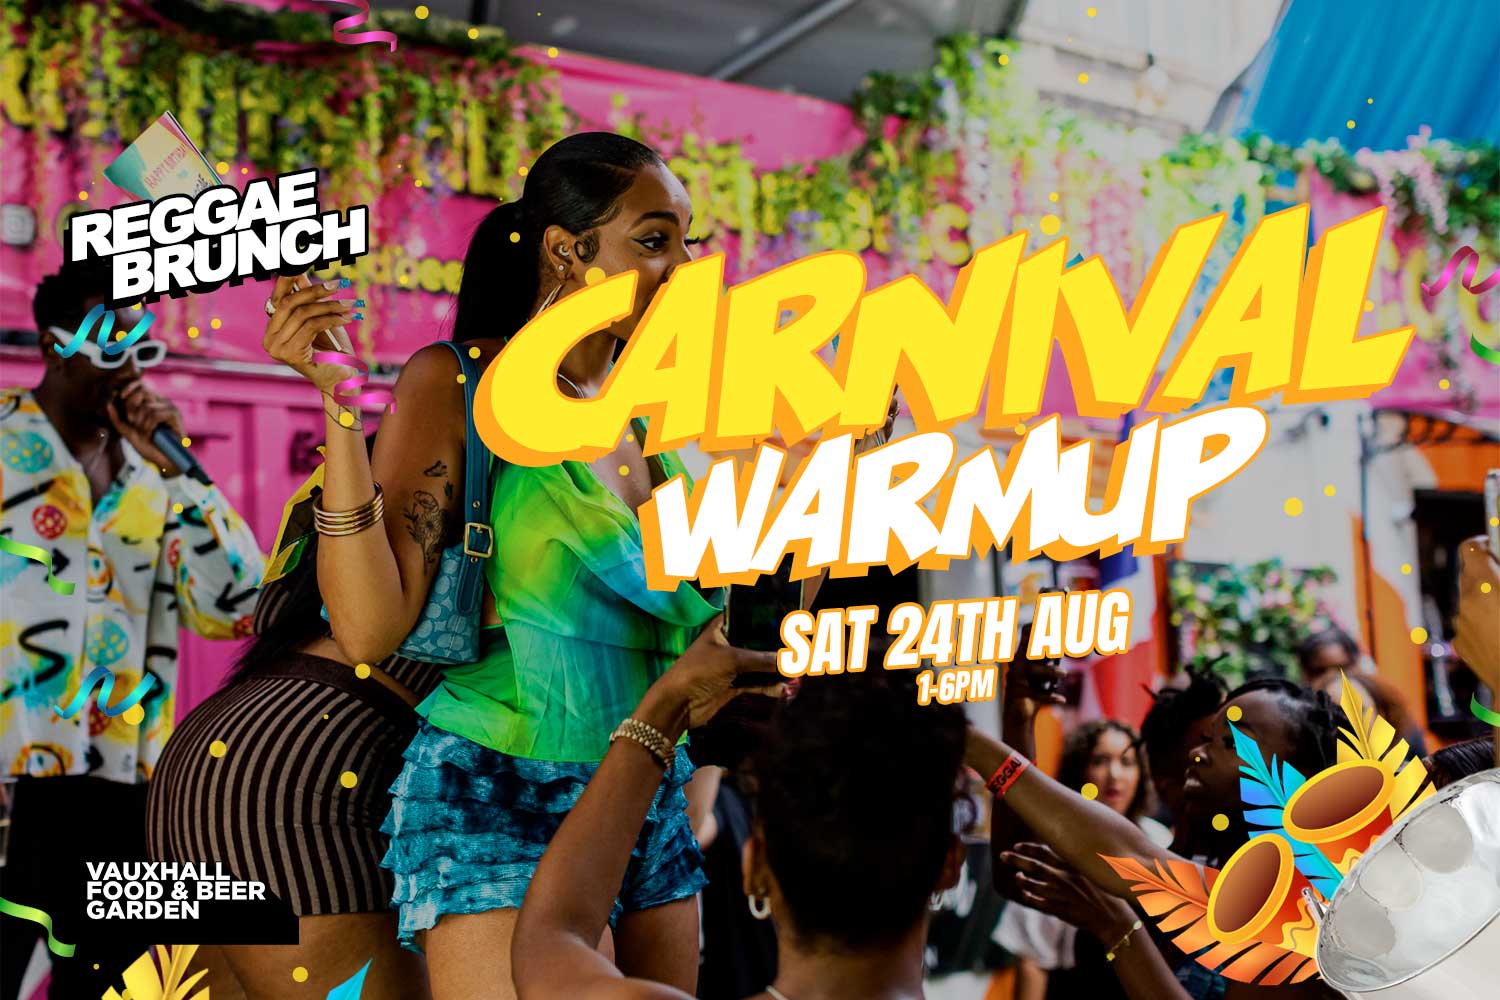 Sat, 24th Aug | Carnival Warmup